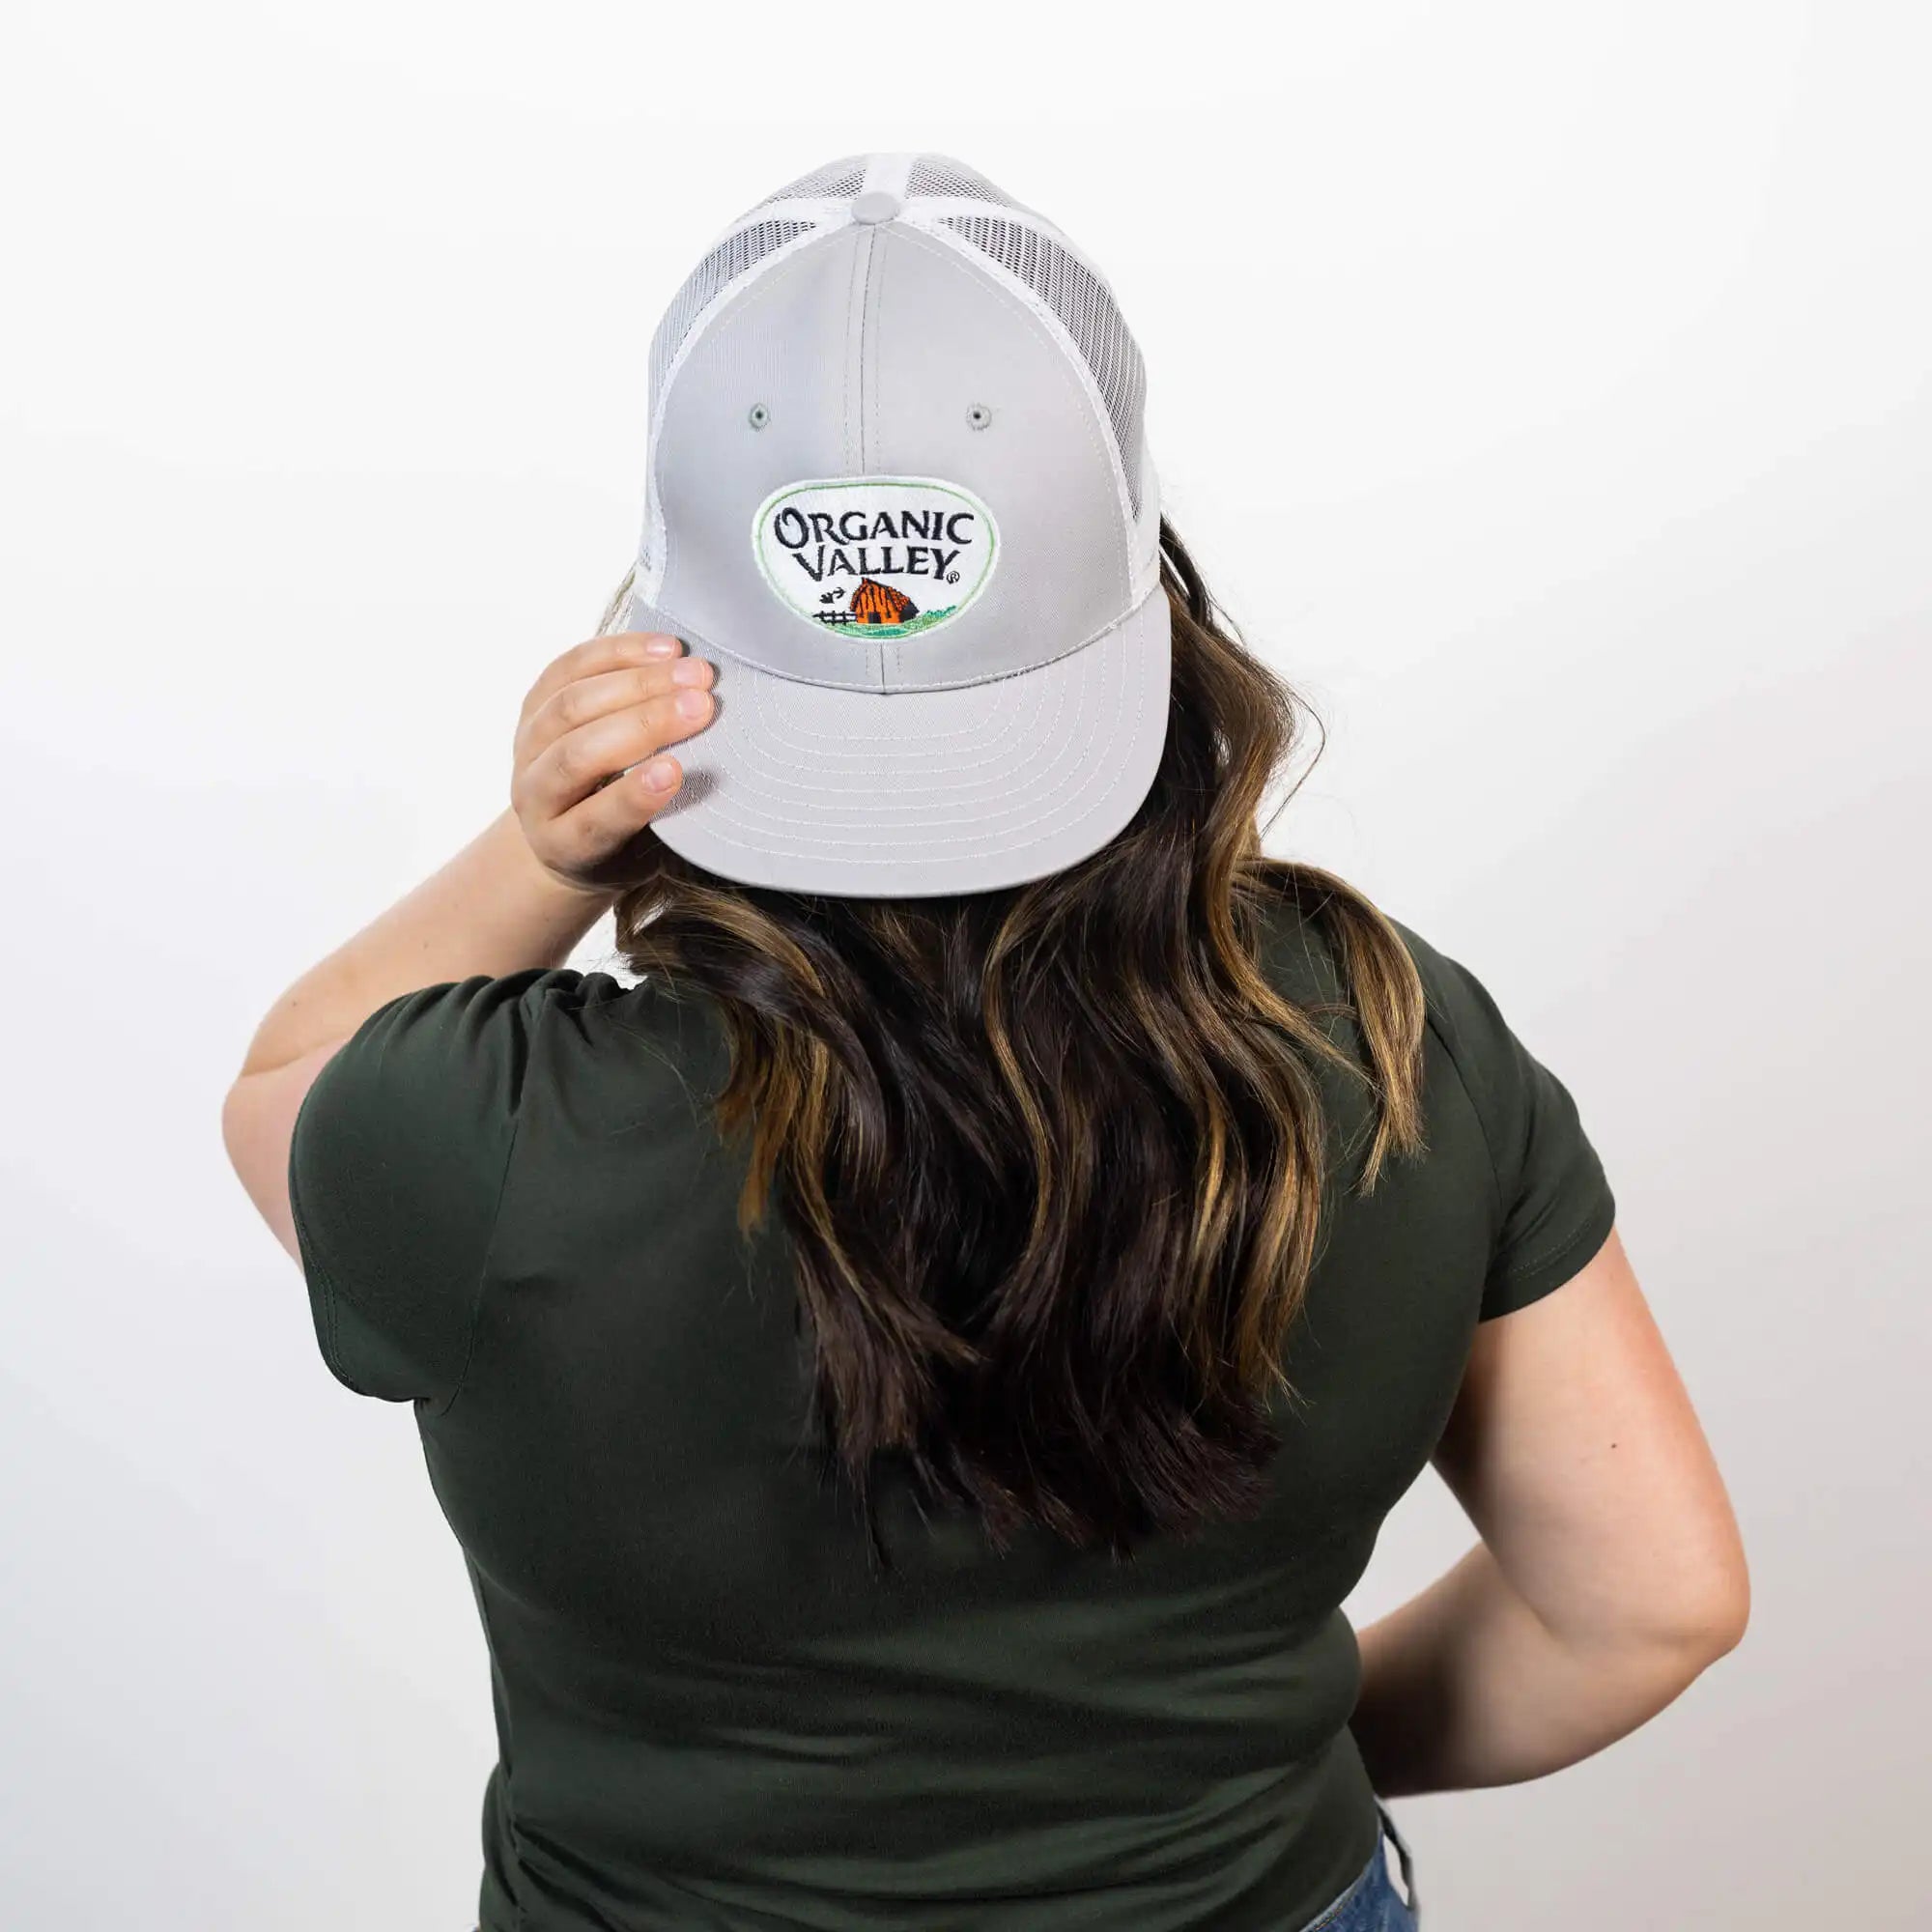 Organic Valley Logo Hat in Light Gray color